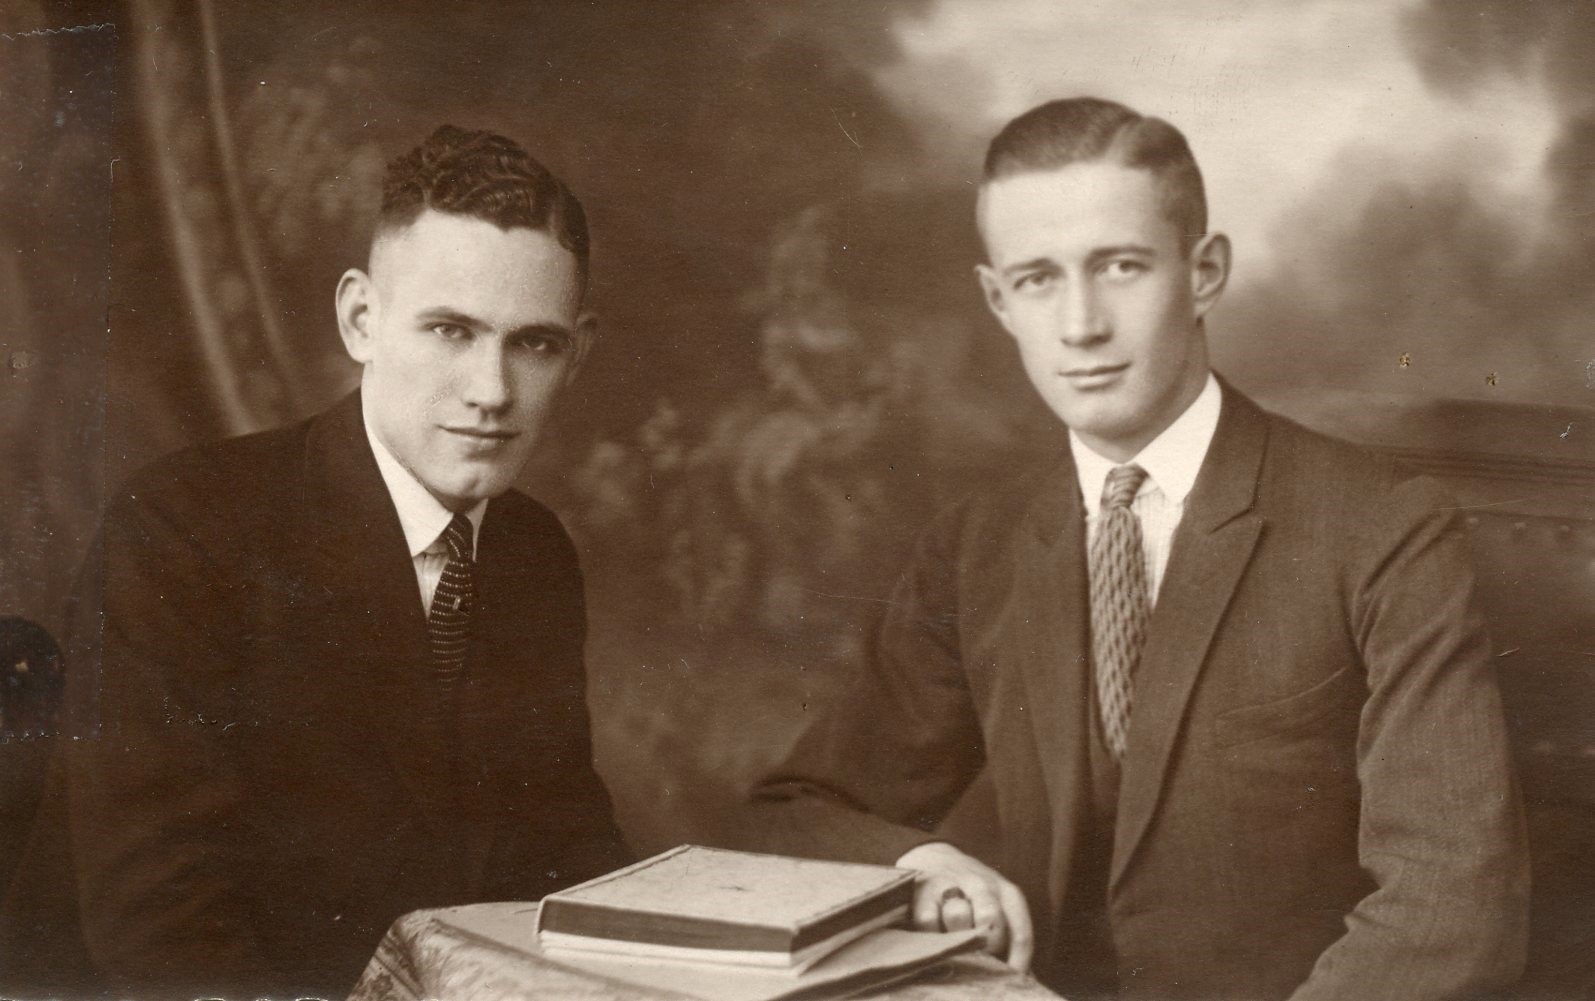 Missionary companions, Konigsberg, Germany Jan 1926